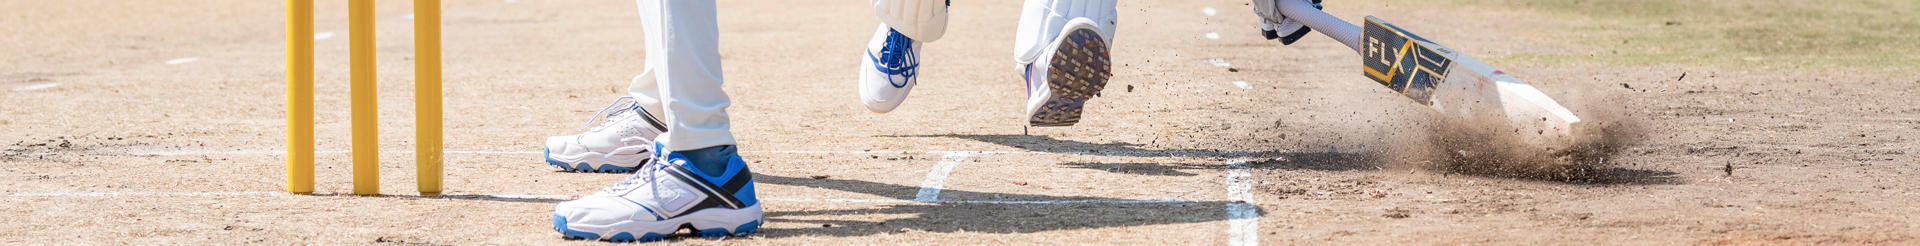 decathlon cricket spikes shoes